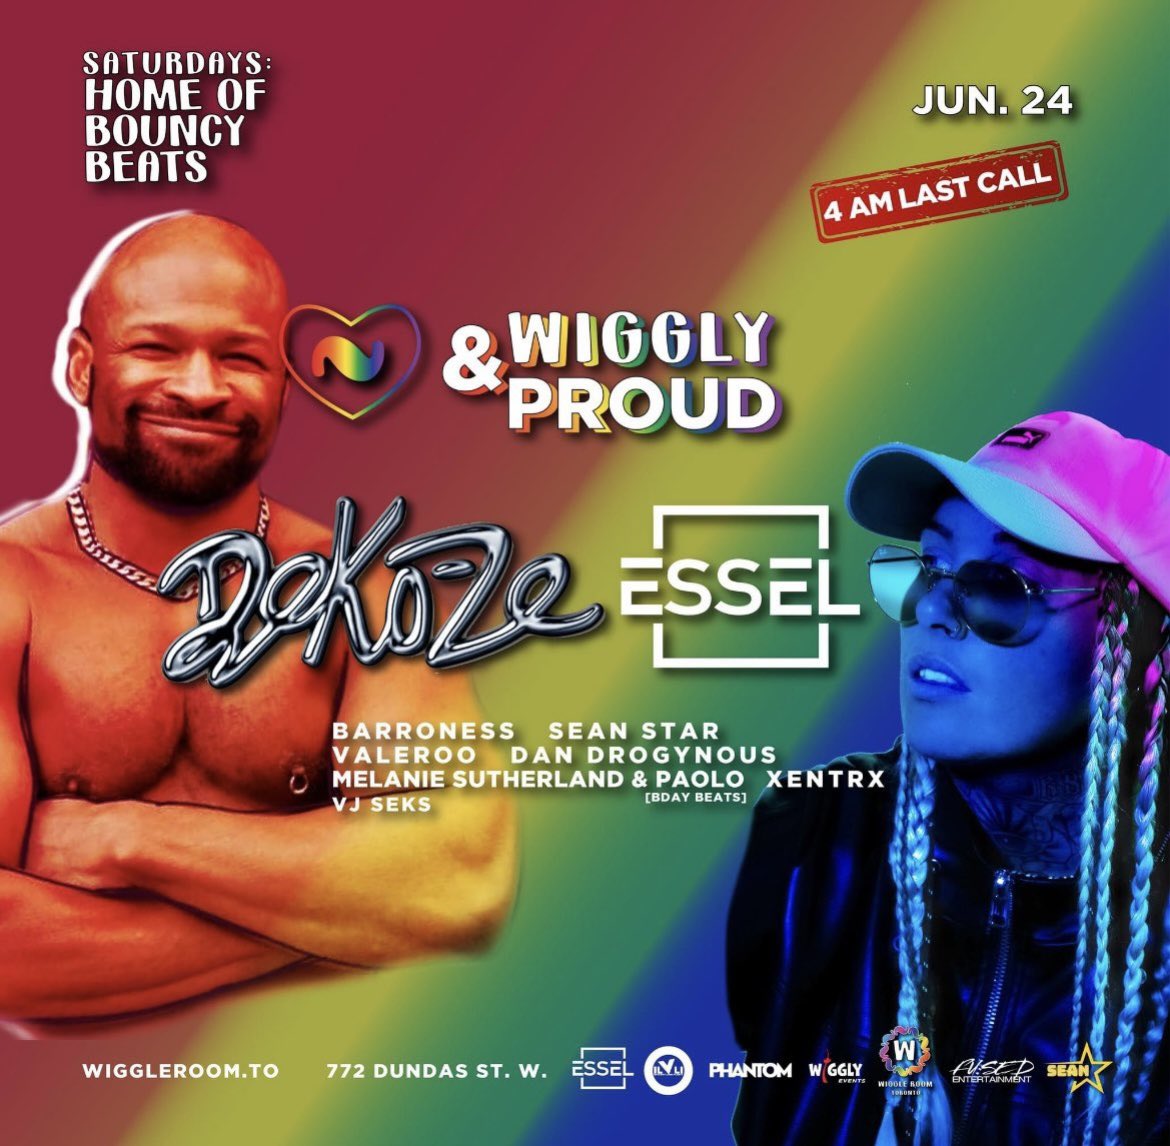 June 24 - WiGGLY & PROUD  🏳️‍🌈
+4AM LAST CALL - Featuring  Dekoze 
 & @ESSELUKOFFICIAL 
Music will be bouncy, dirty, jackin, deep, tech. #dj #femaledjs 
772 Dundas St West #housemusic #pridetoronto @WiggleRoomTO @DjMelanieS